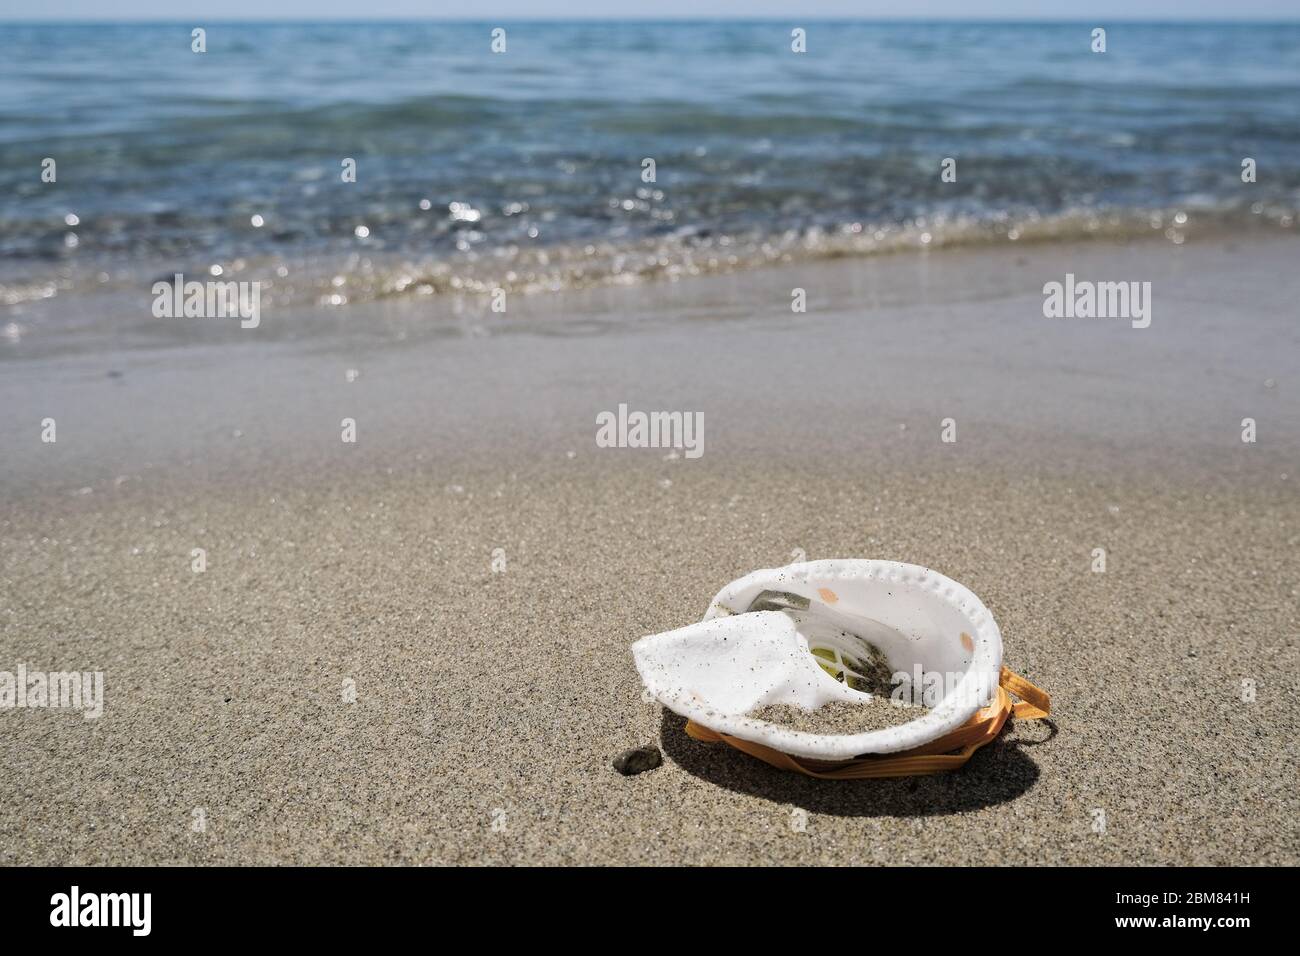 Protective virus mask garbage trash on sandy sea shore,coronavirus covid pollution disease  Stock Photo